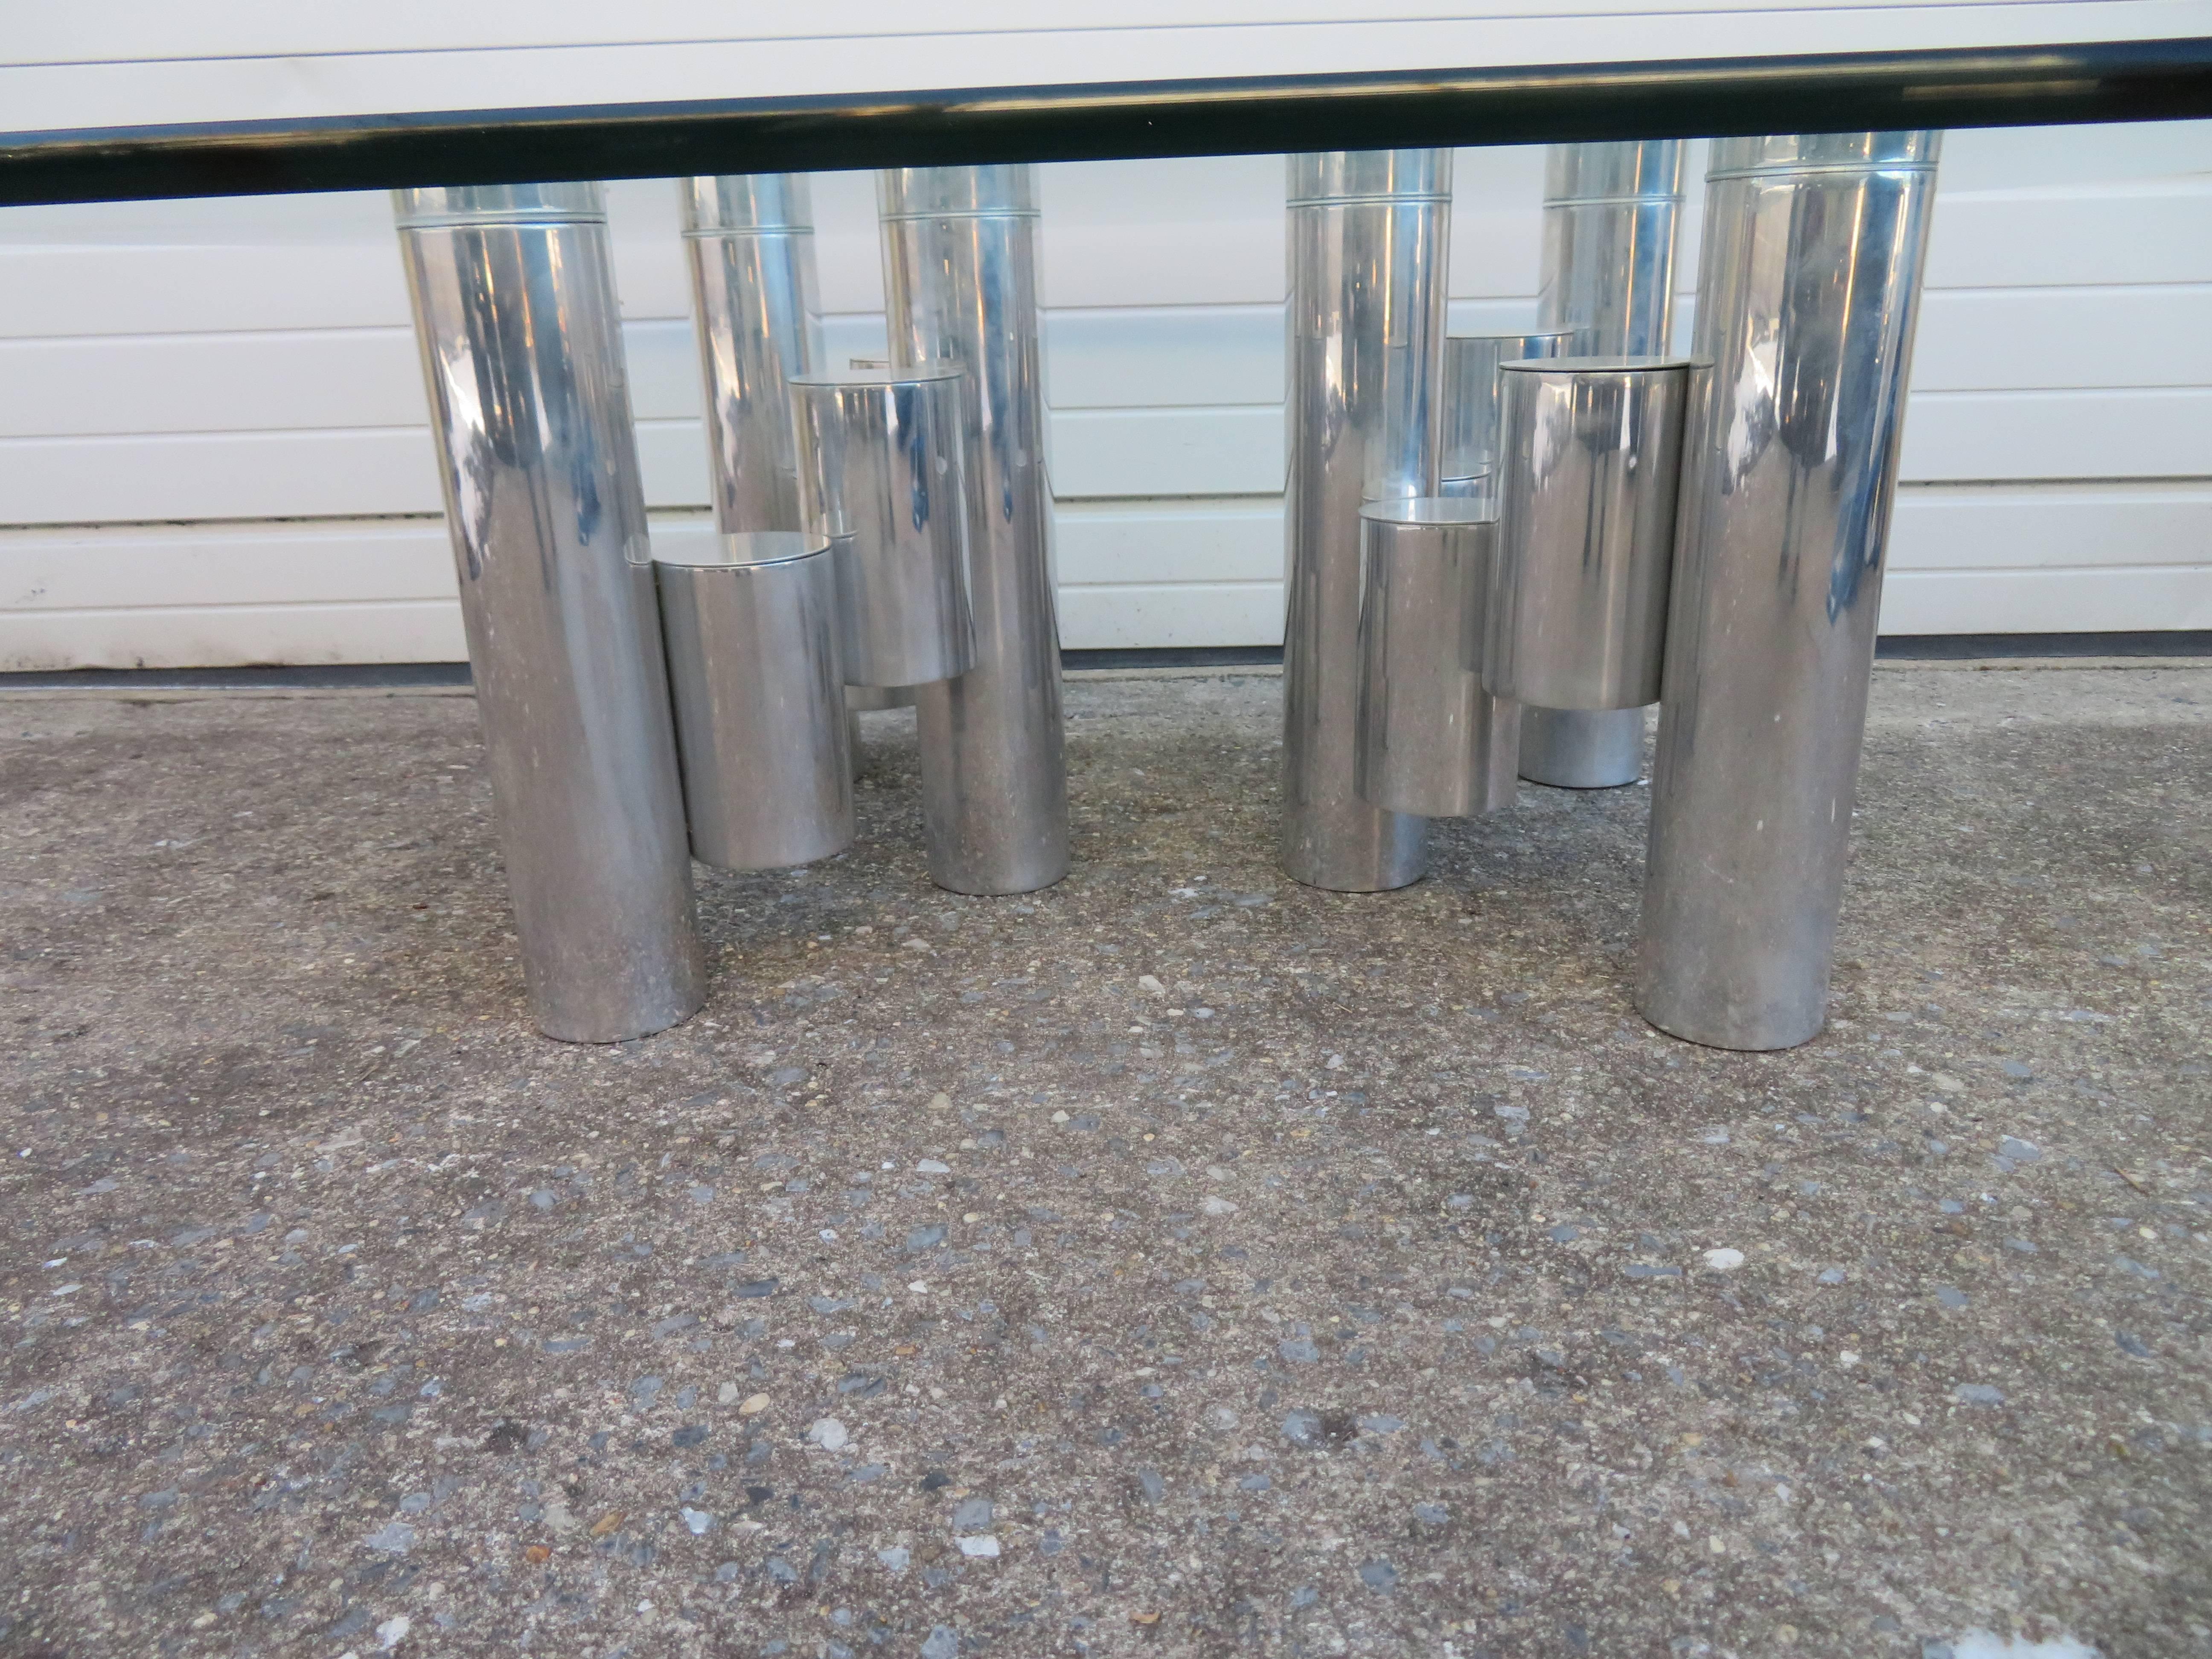 Superbe table basse cylindrique en aluminium Paul Mayen for Habitat. Les bases inhabituelles mesurent 15